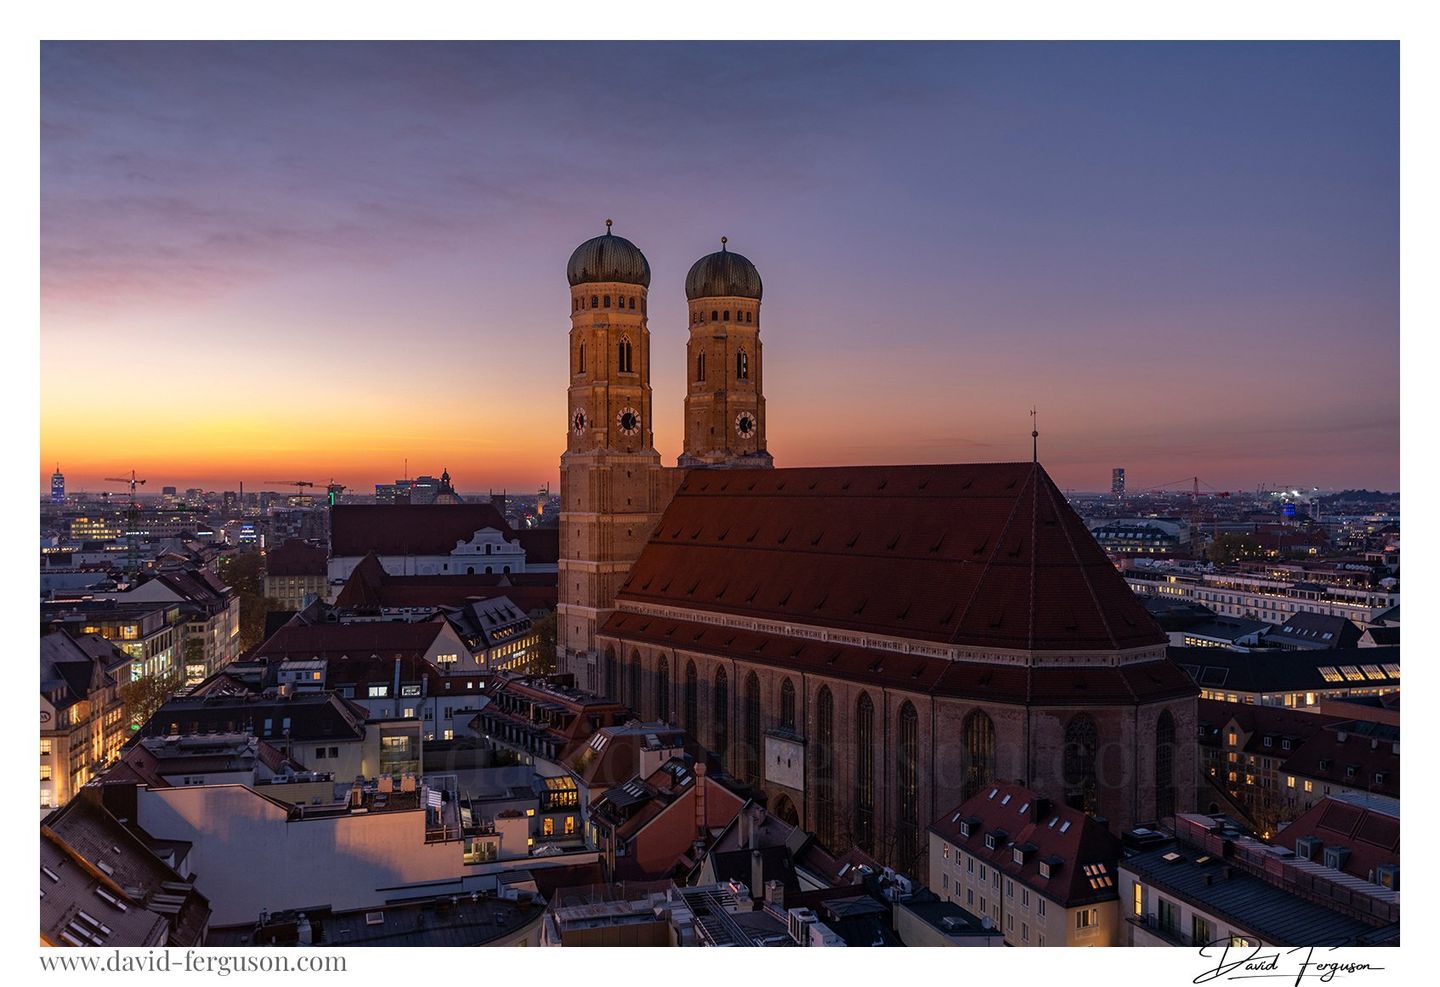 Munich Photo Gallery by David Ferguson